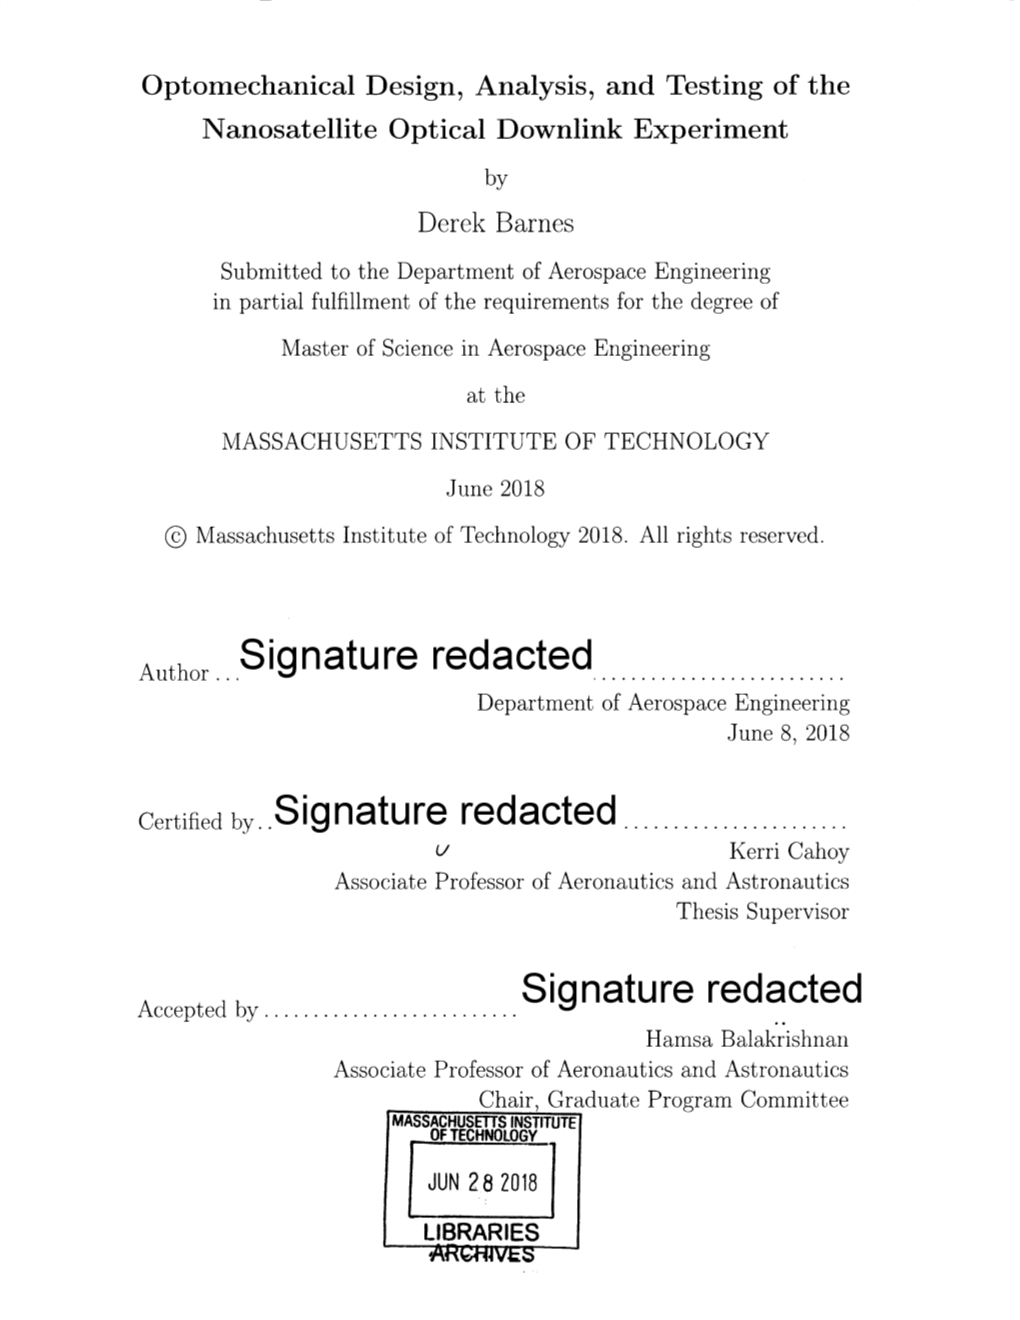 Signature Redacted Department of Aerospace Engineering June 8, 2018